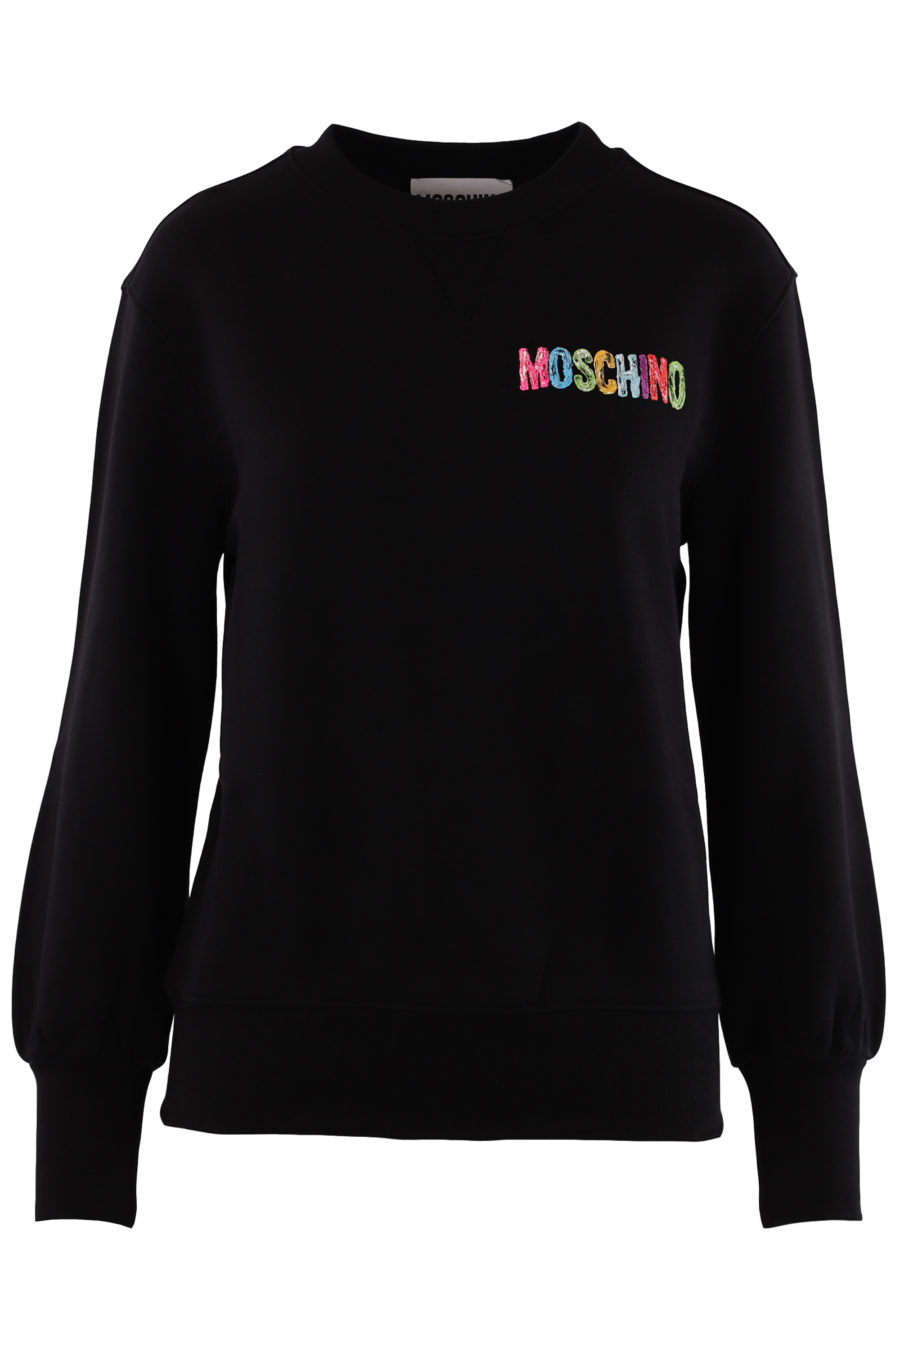 Schwarzes Sweatshirt mit mehrfarbigem Logo - 31d3bca3b5ae119295bf83d91097a5ba7b43e88d